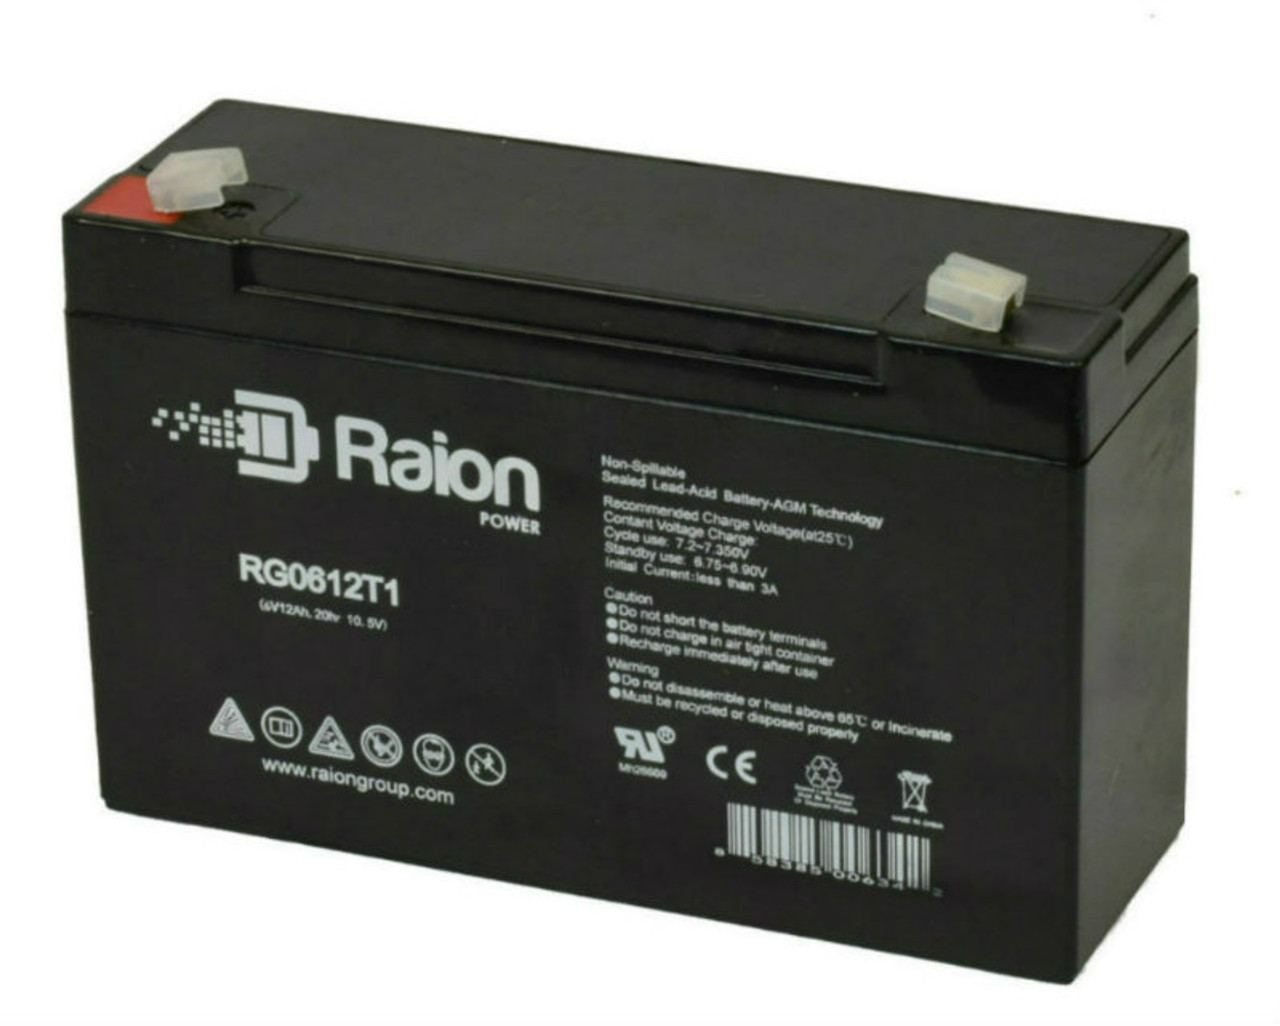 Raion Power RG06120T1 Replacement 6V 12Ah Emergency Light Battery for Chloride 1001136-Retrofit